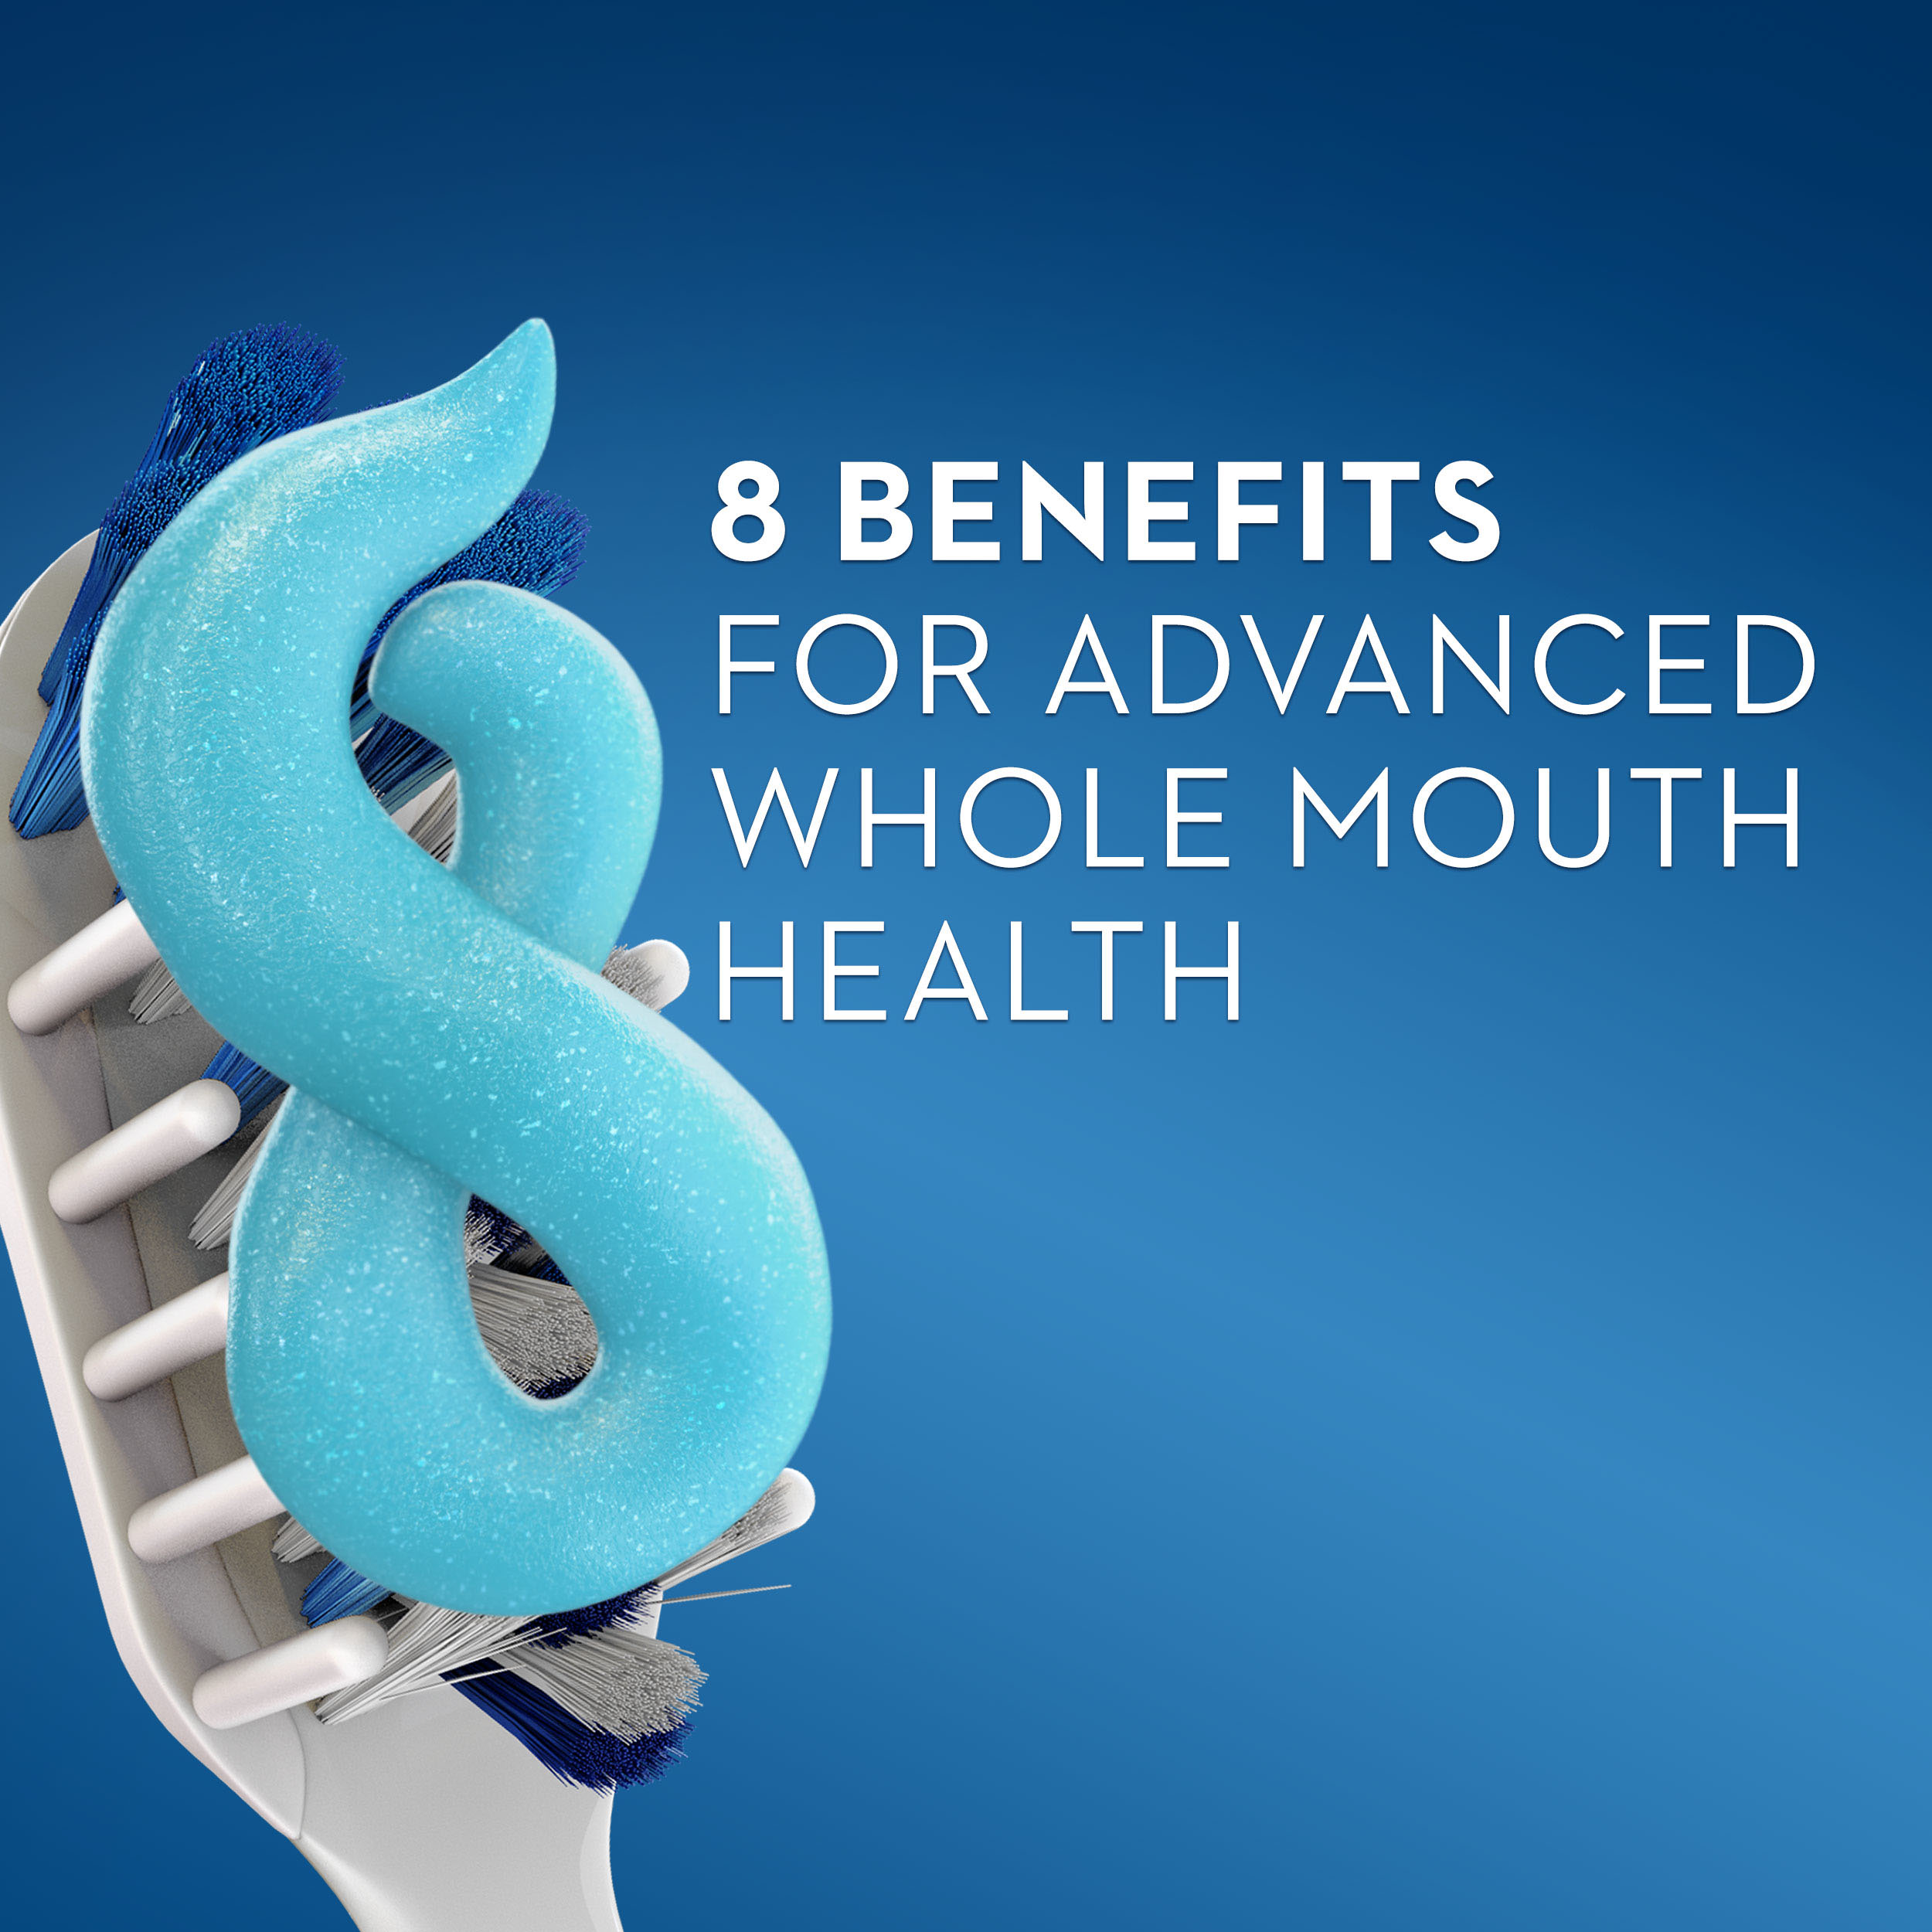 Crest Pro-Health Sensitive & Enamel Shield Toothpaste, 4.6 oz, Pack of 3 - image 5 of 7